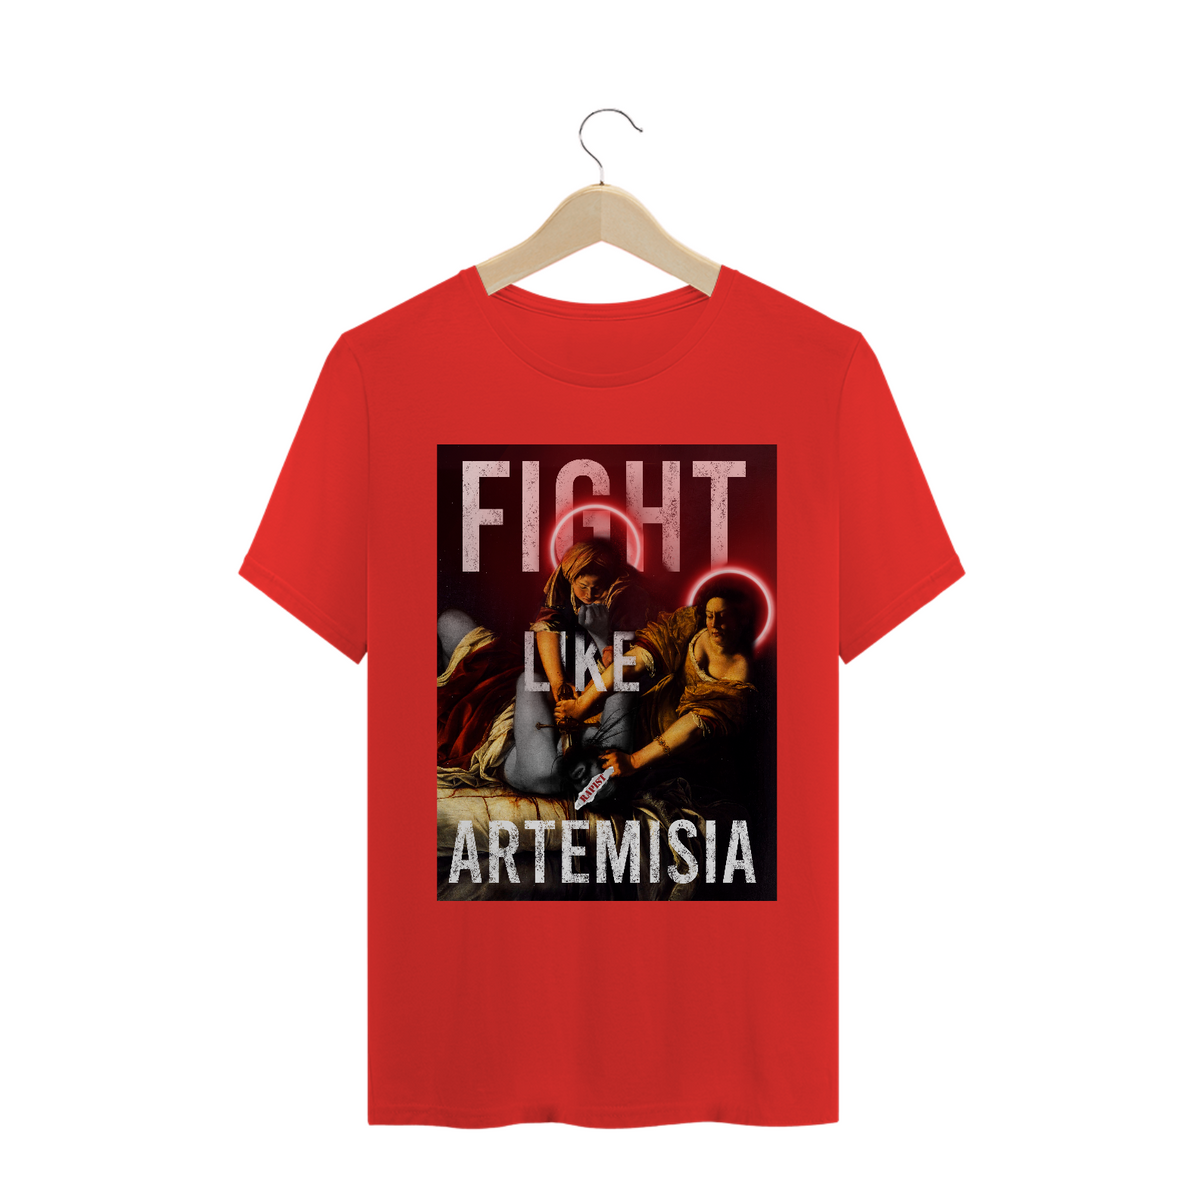 Nome do produto: FIGHT LIKE ARTEMISIA